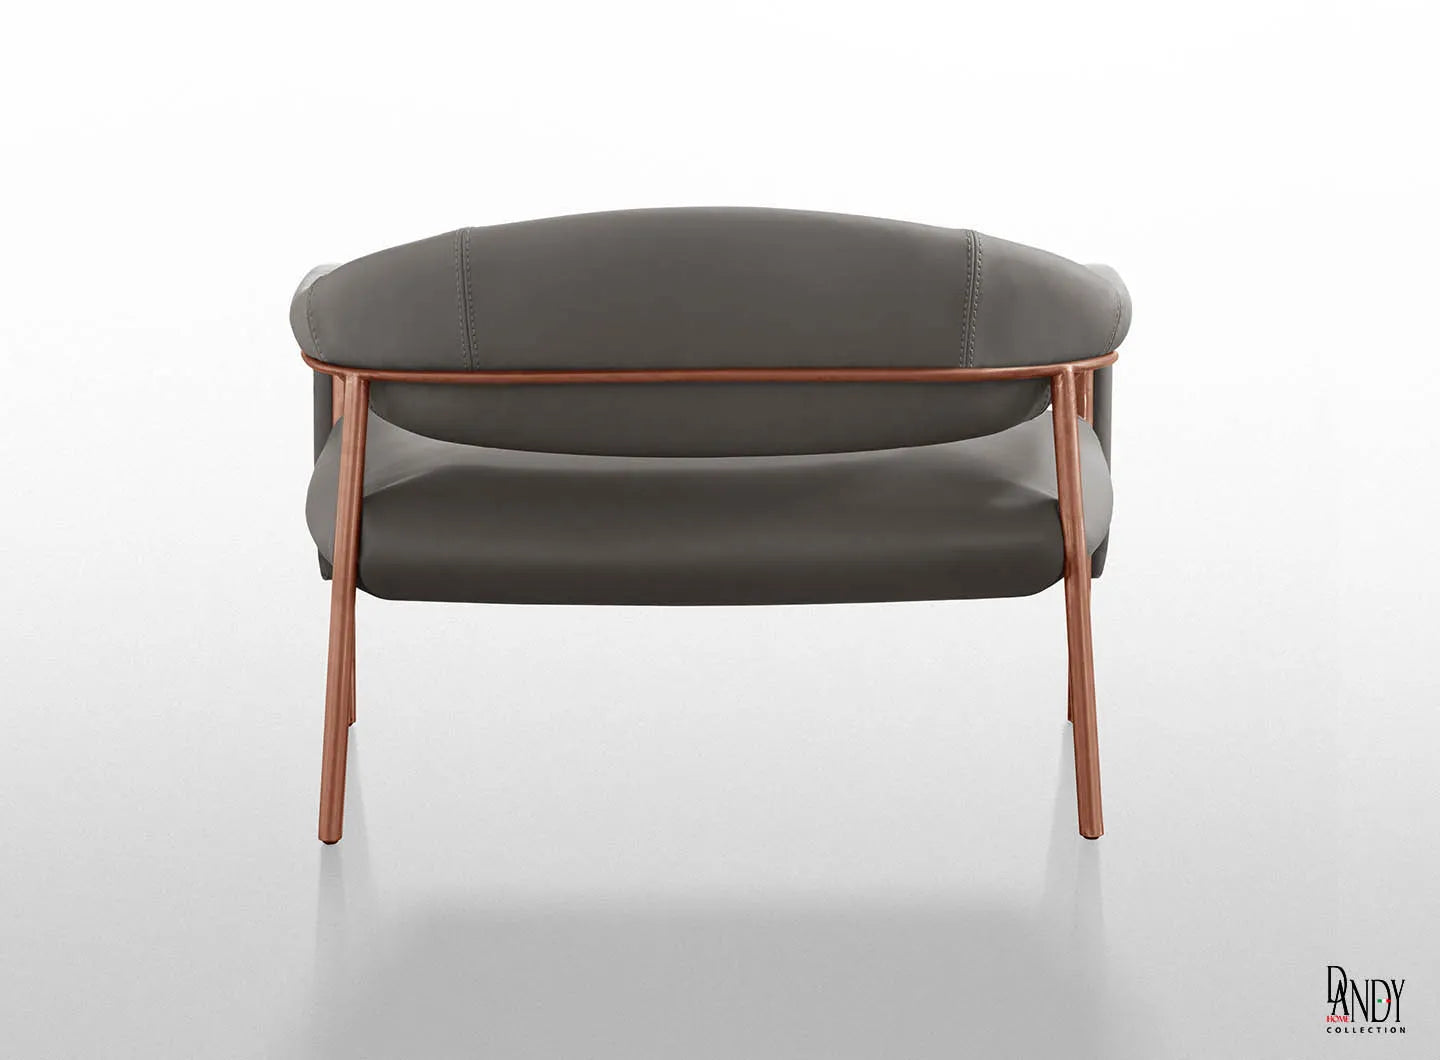 Spyder Leather chair | HOG - Home. Office. Garden online marketplace